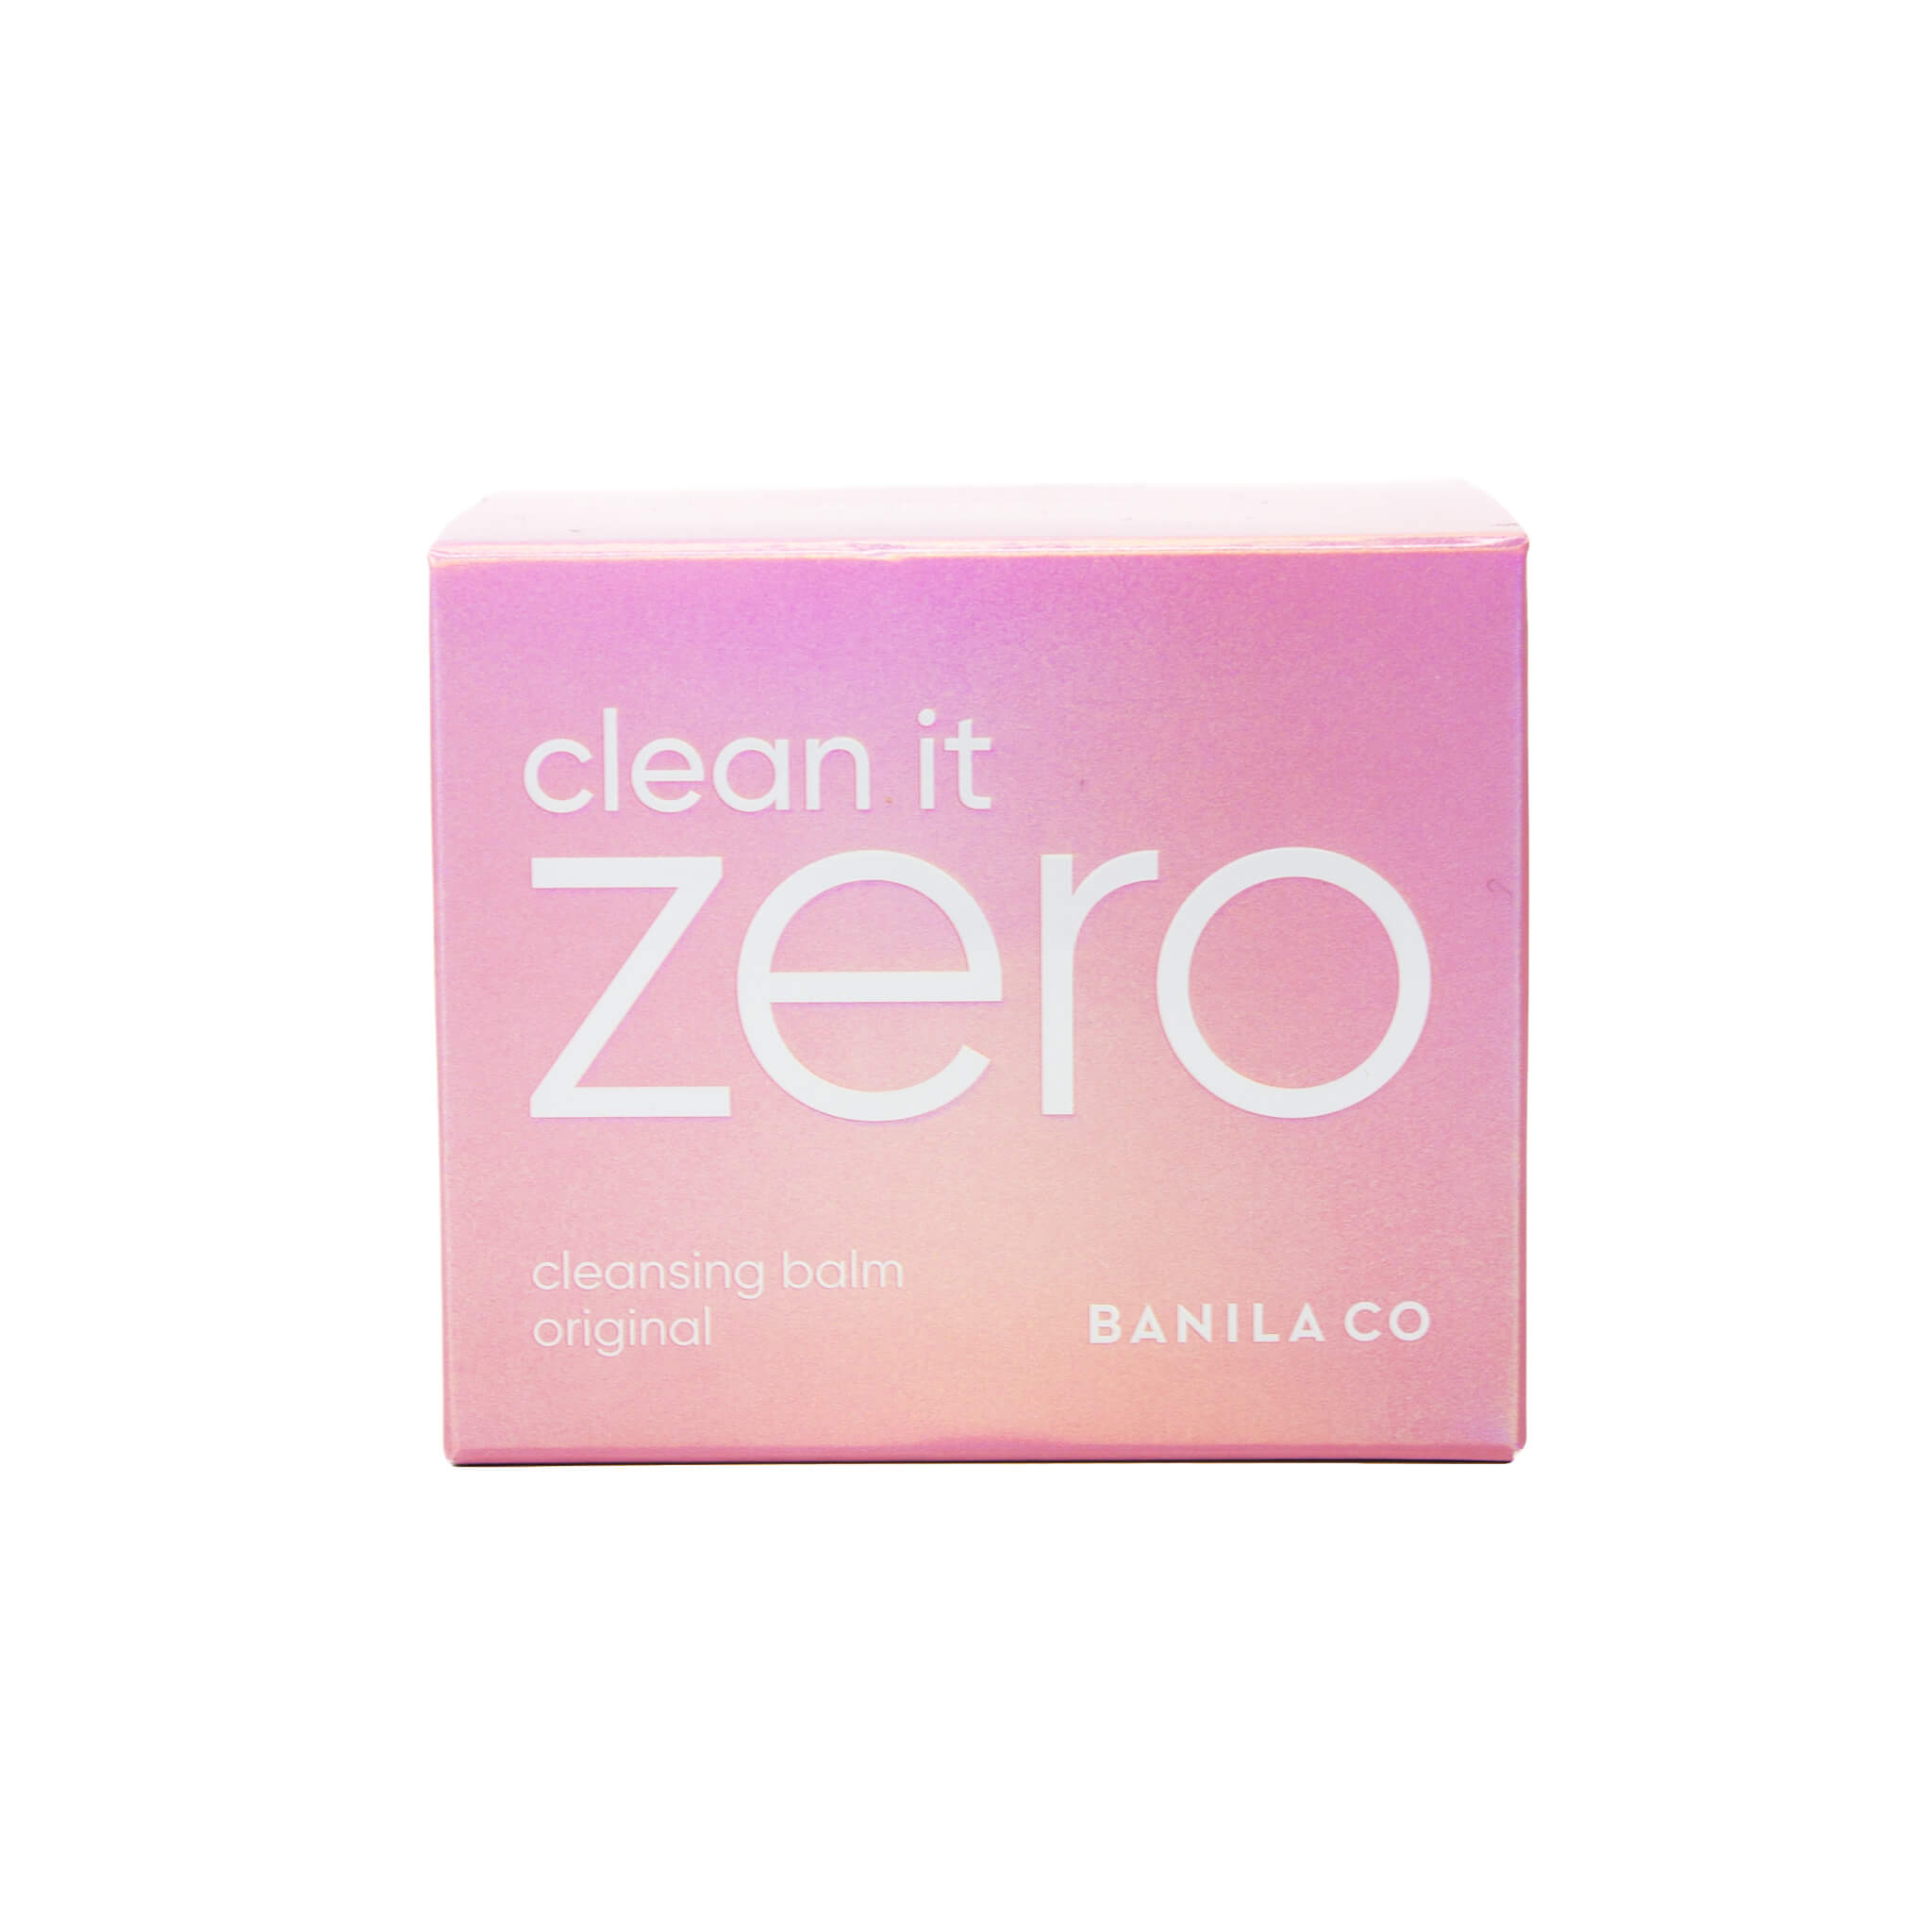 BANILA CO Clean It Zero Cleansing Balm [Original] (3.38 oz)